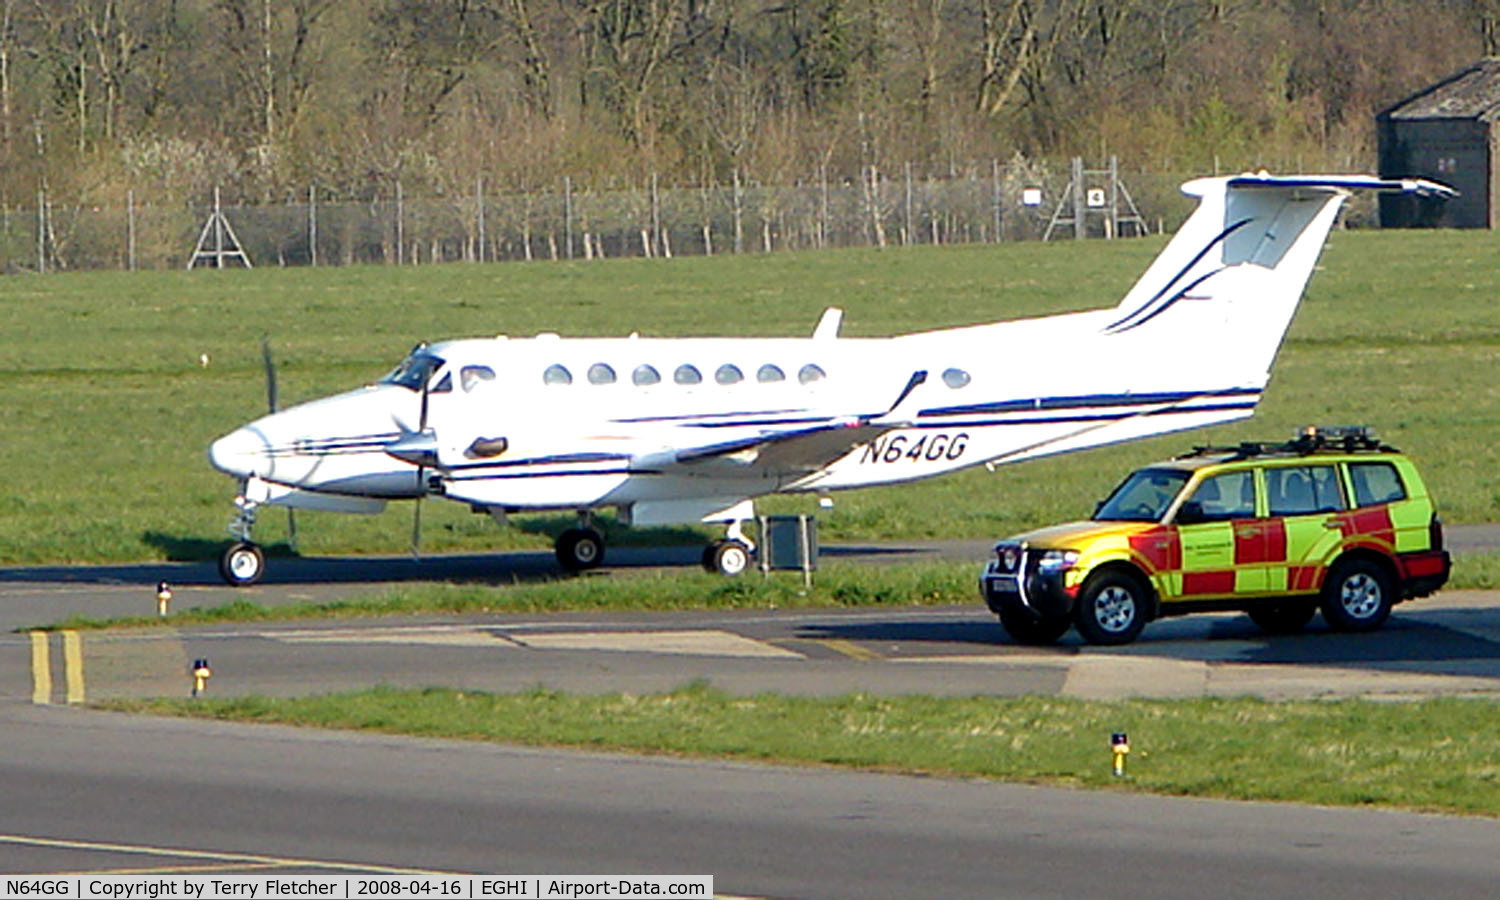 N64GG, 2000 Beech Super King Air 350 C/N FL-274, Beech 200 taxies in at Southampton